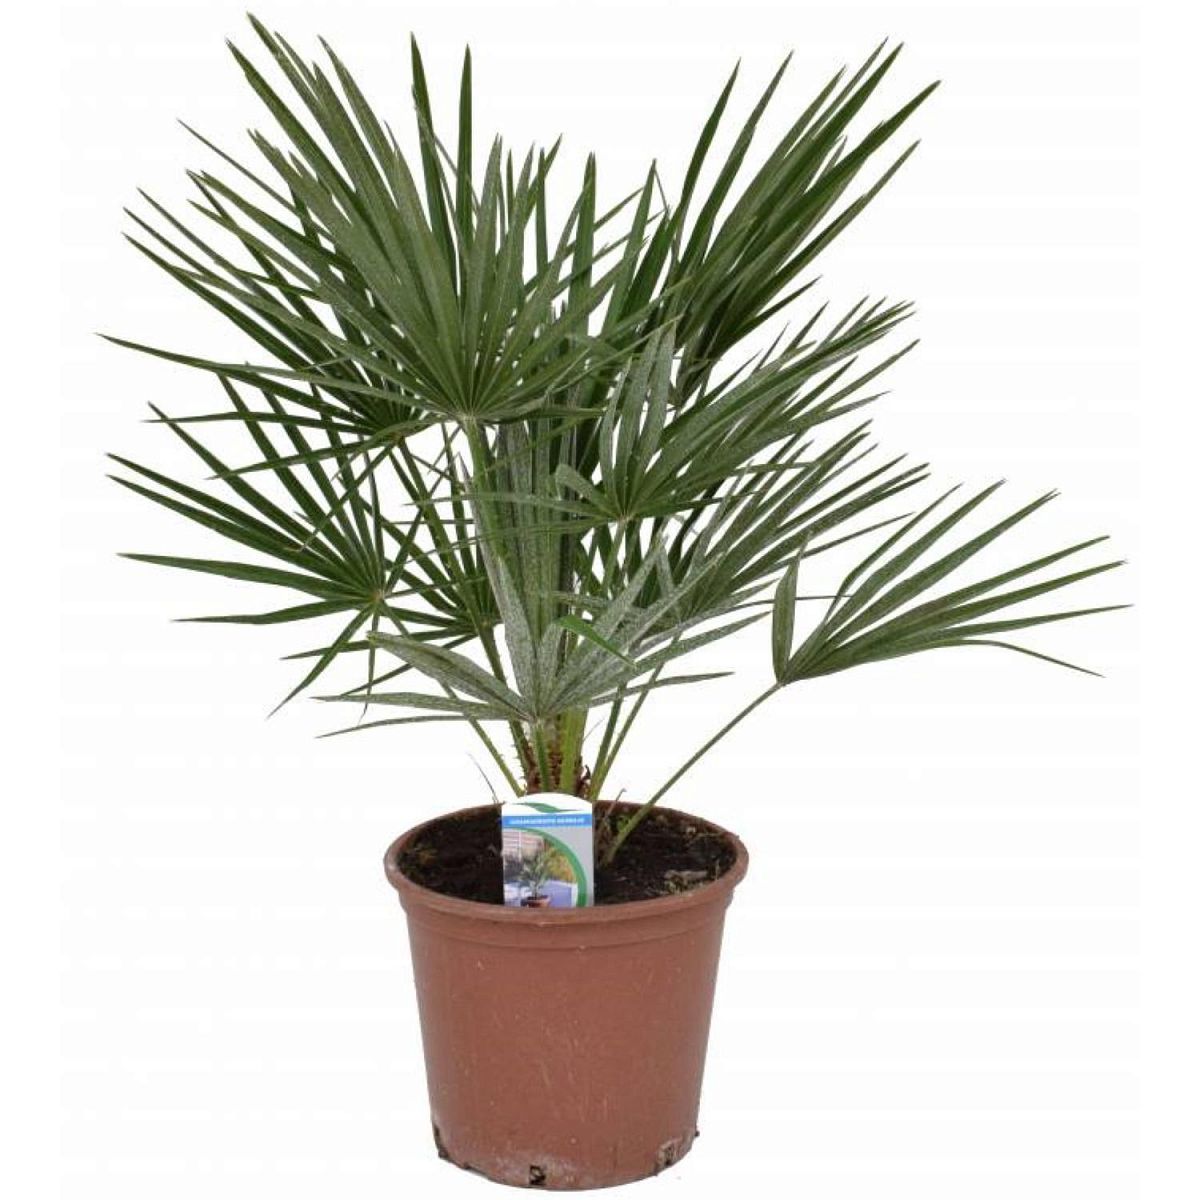 European Fan Palm Chamaerops palm, Mediterranean Fan Palm Tree (Chamaerops Humilis)